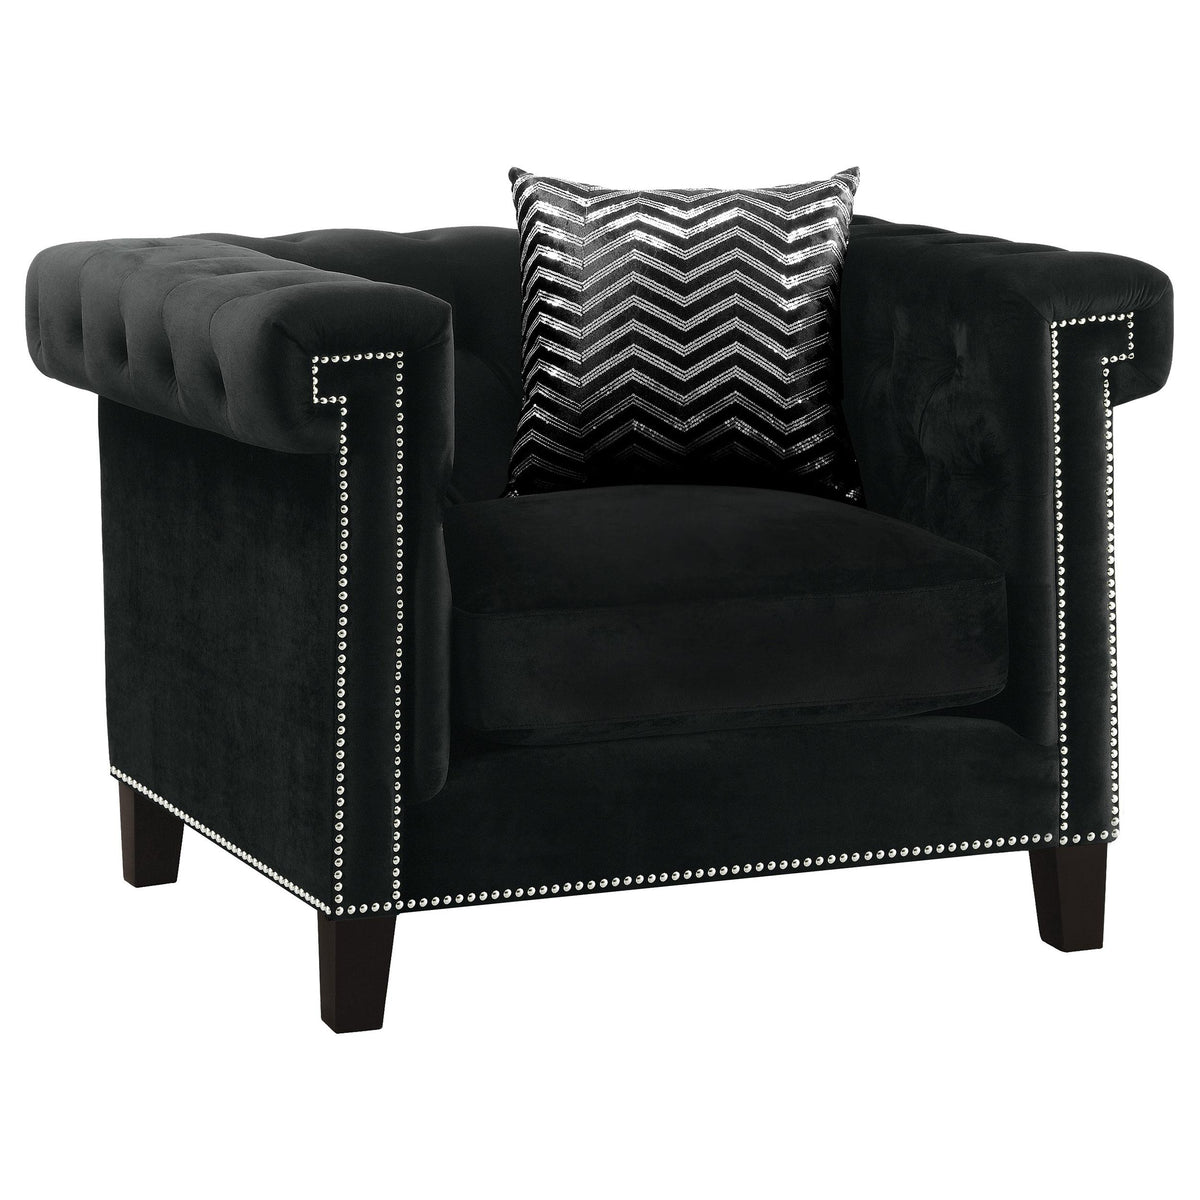 Reventlow Tufted Chair Black  Las Vegas Furniture Stores